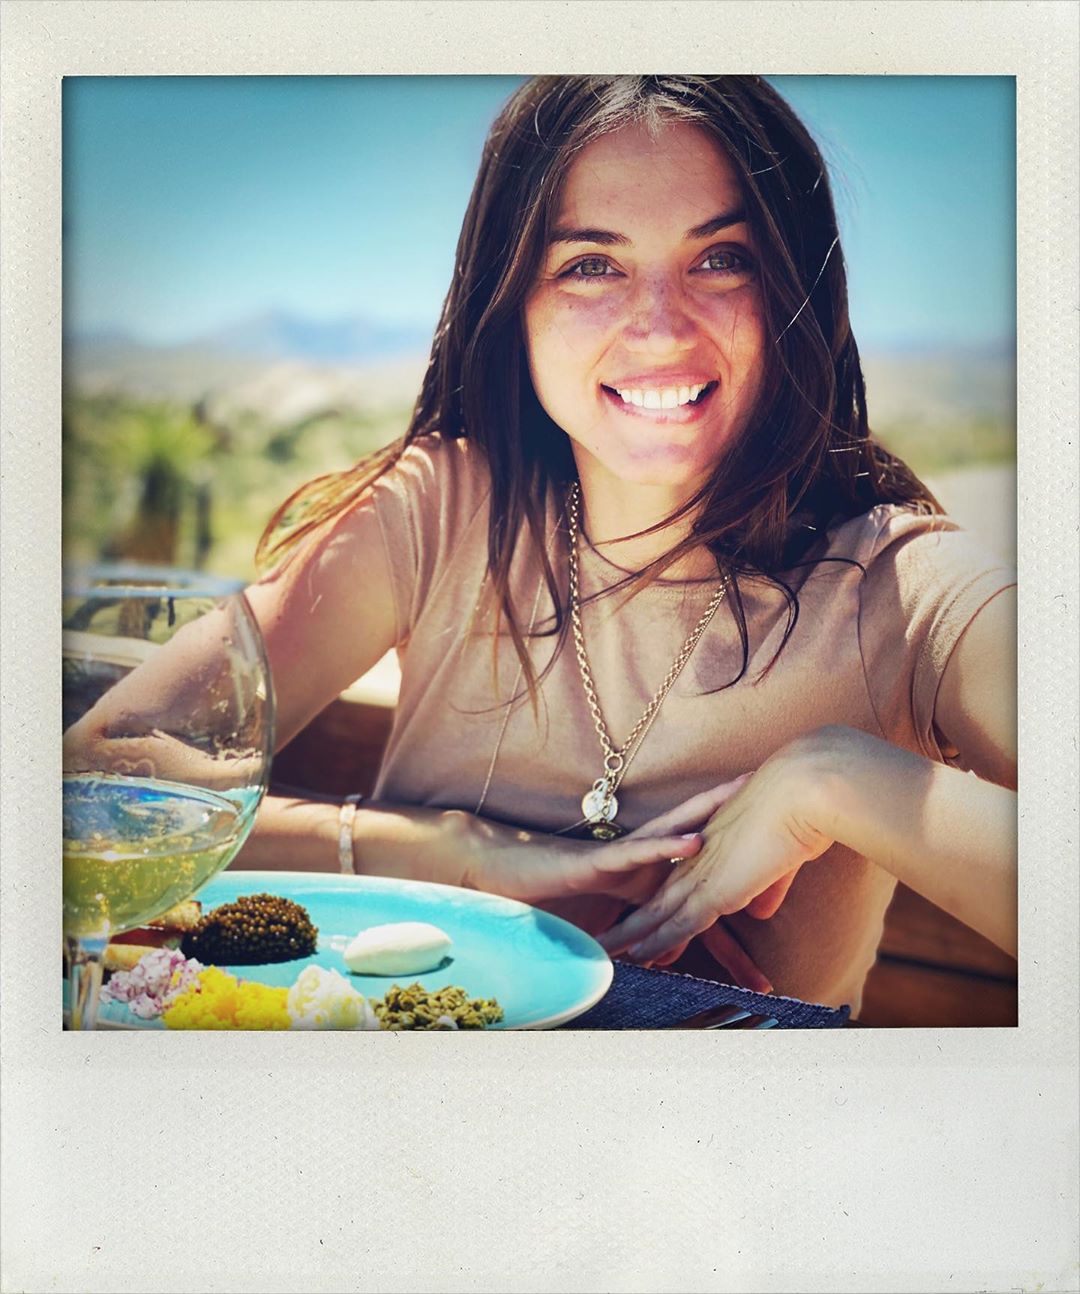 Ana de Armas Celebrates with a Cupcake! - Photo 19